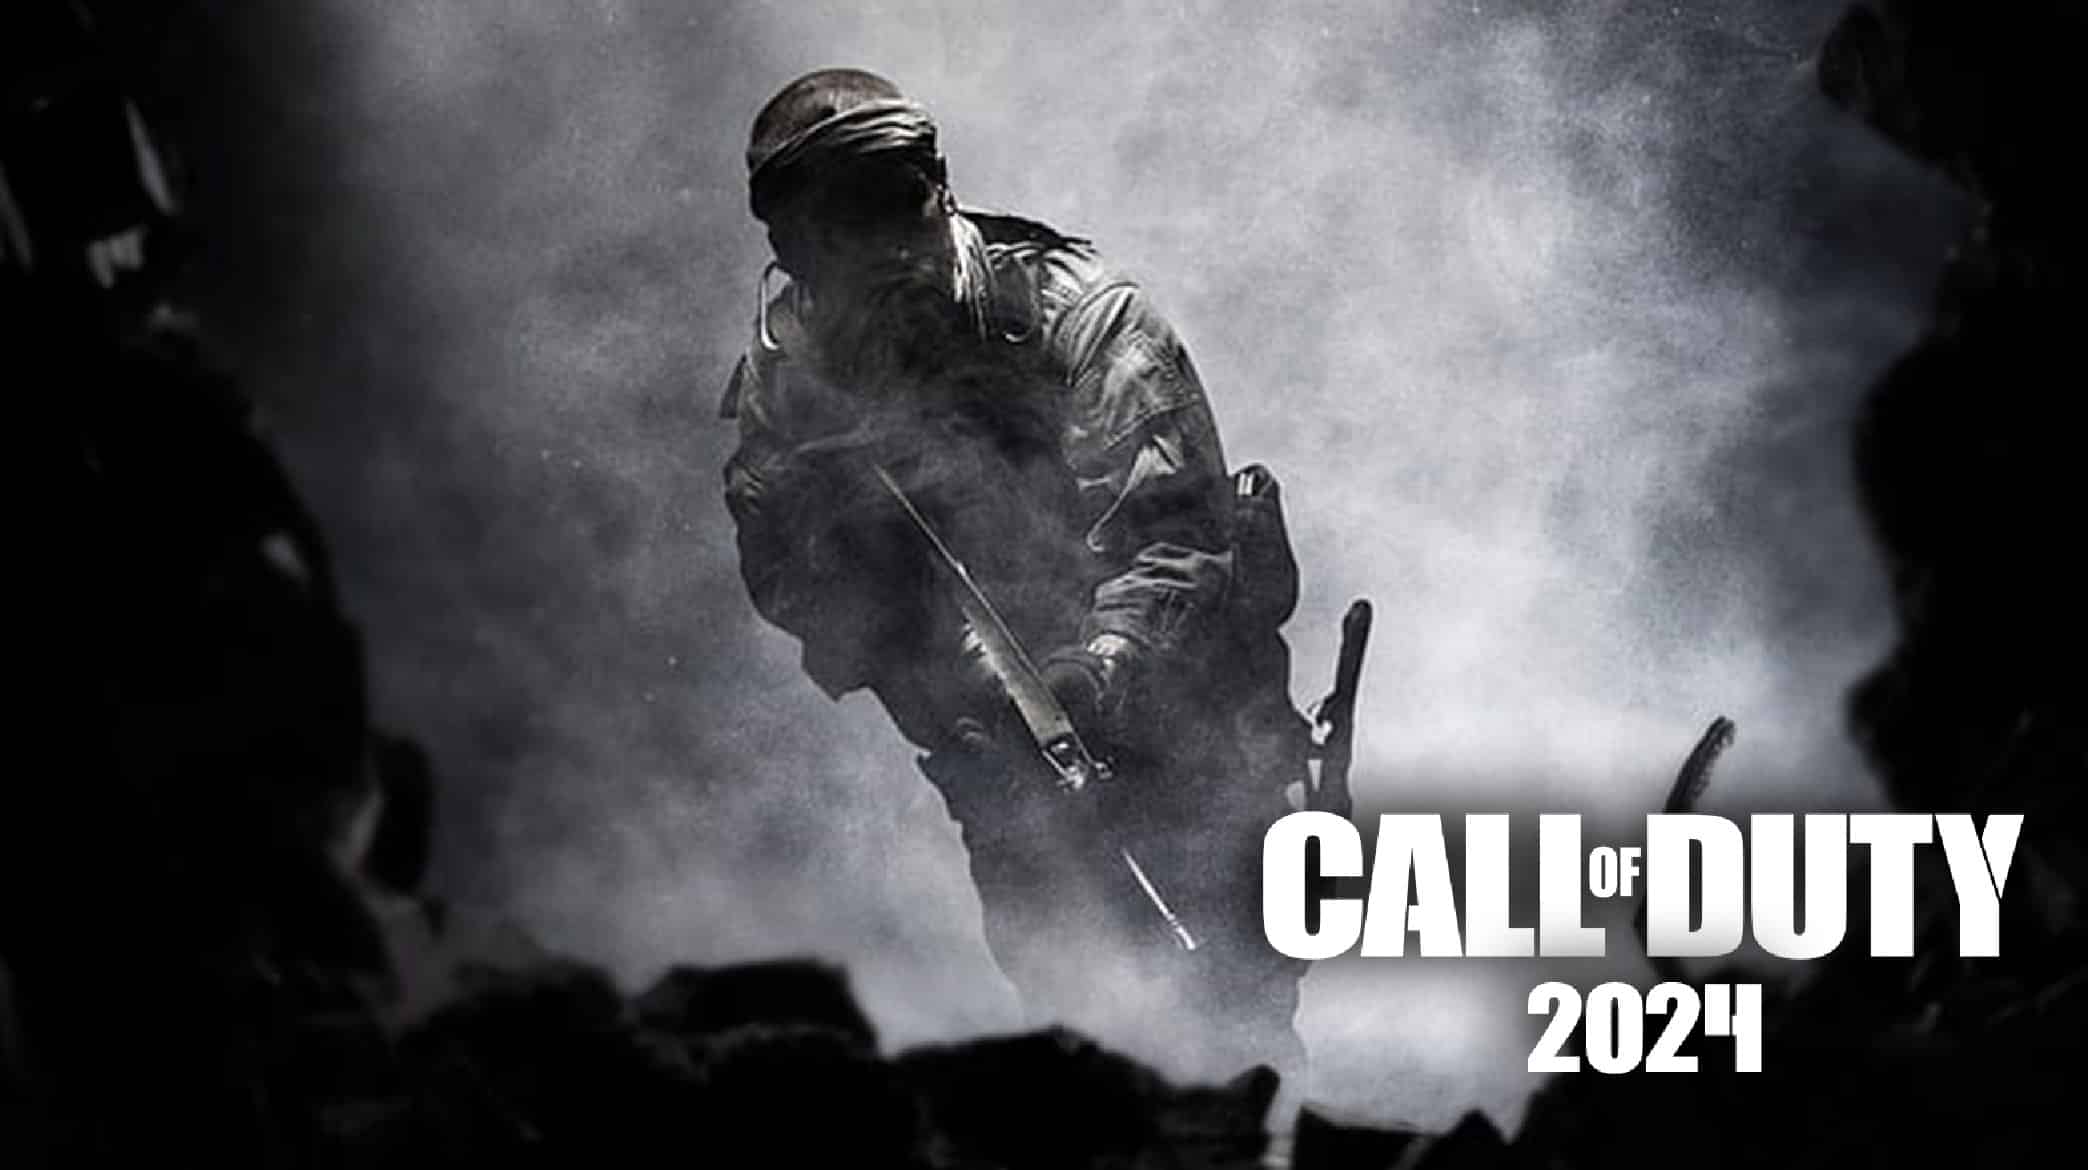 Call of Duty Warzone Mobile release date prediction & pre-register